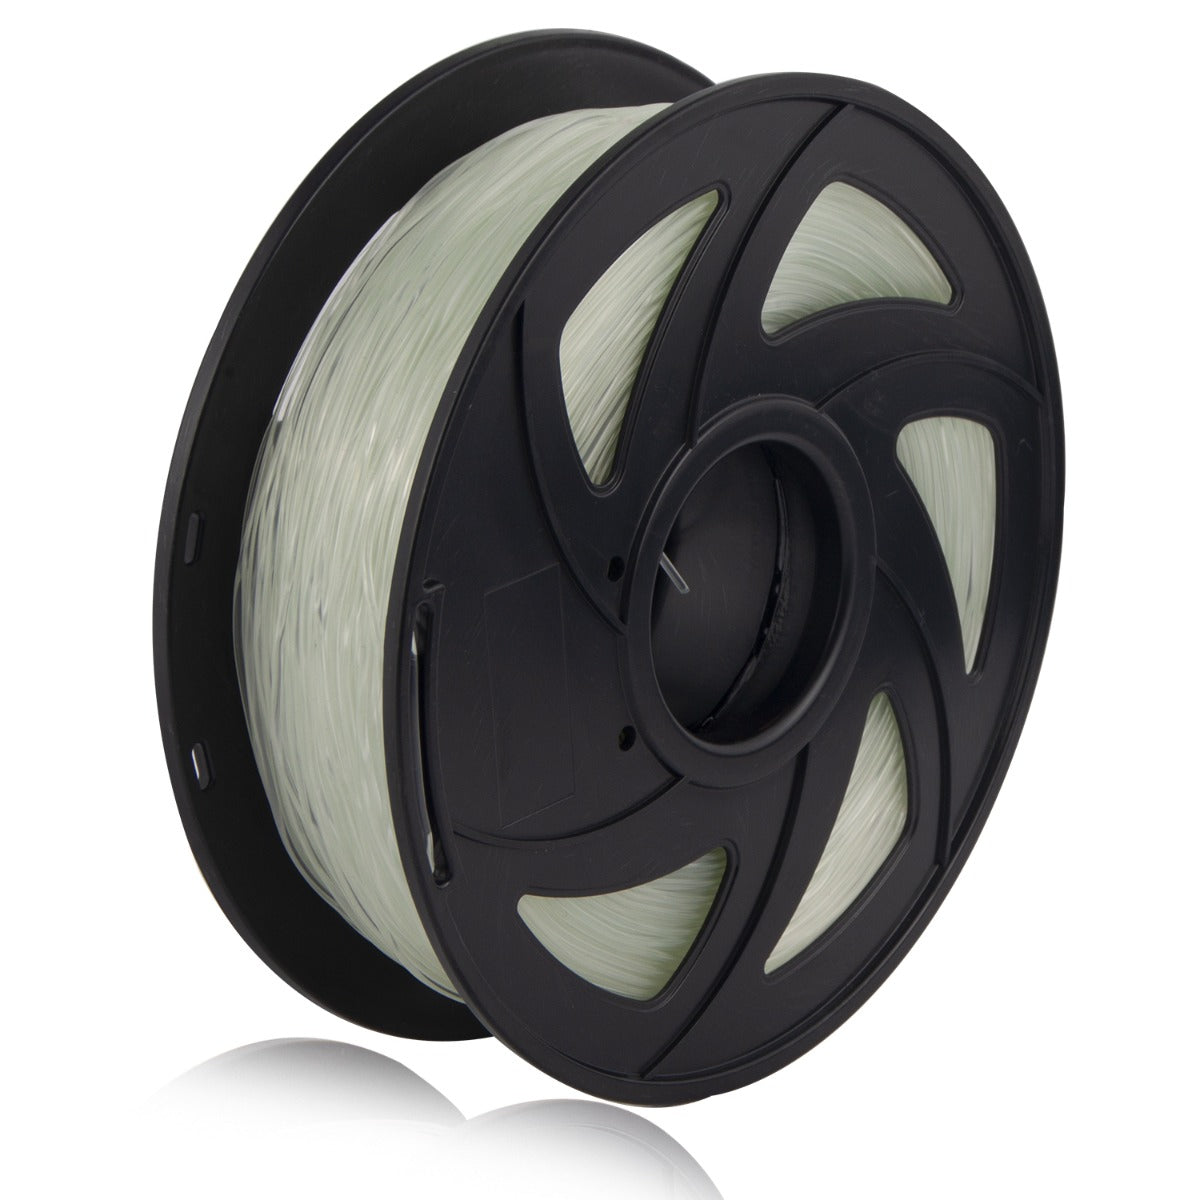 IMPERIAL BRAND PETG TRANSPARENT 3D Printer Filament 1.75mm 1KG Spool Filament for 3D Printing, Dimensional Accuracy +/- 0.02 mm